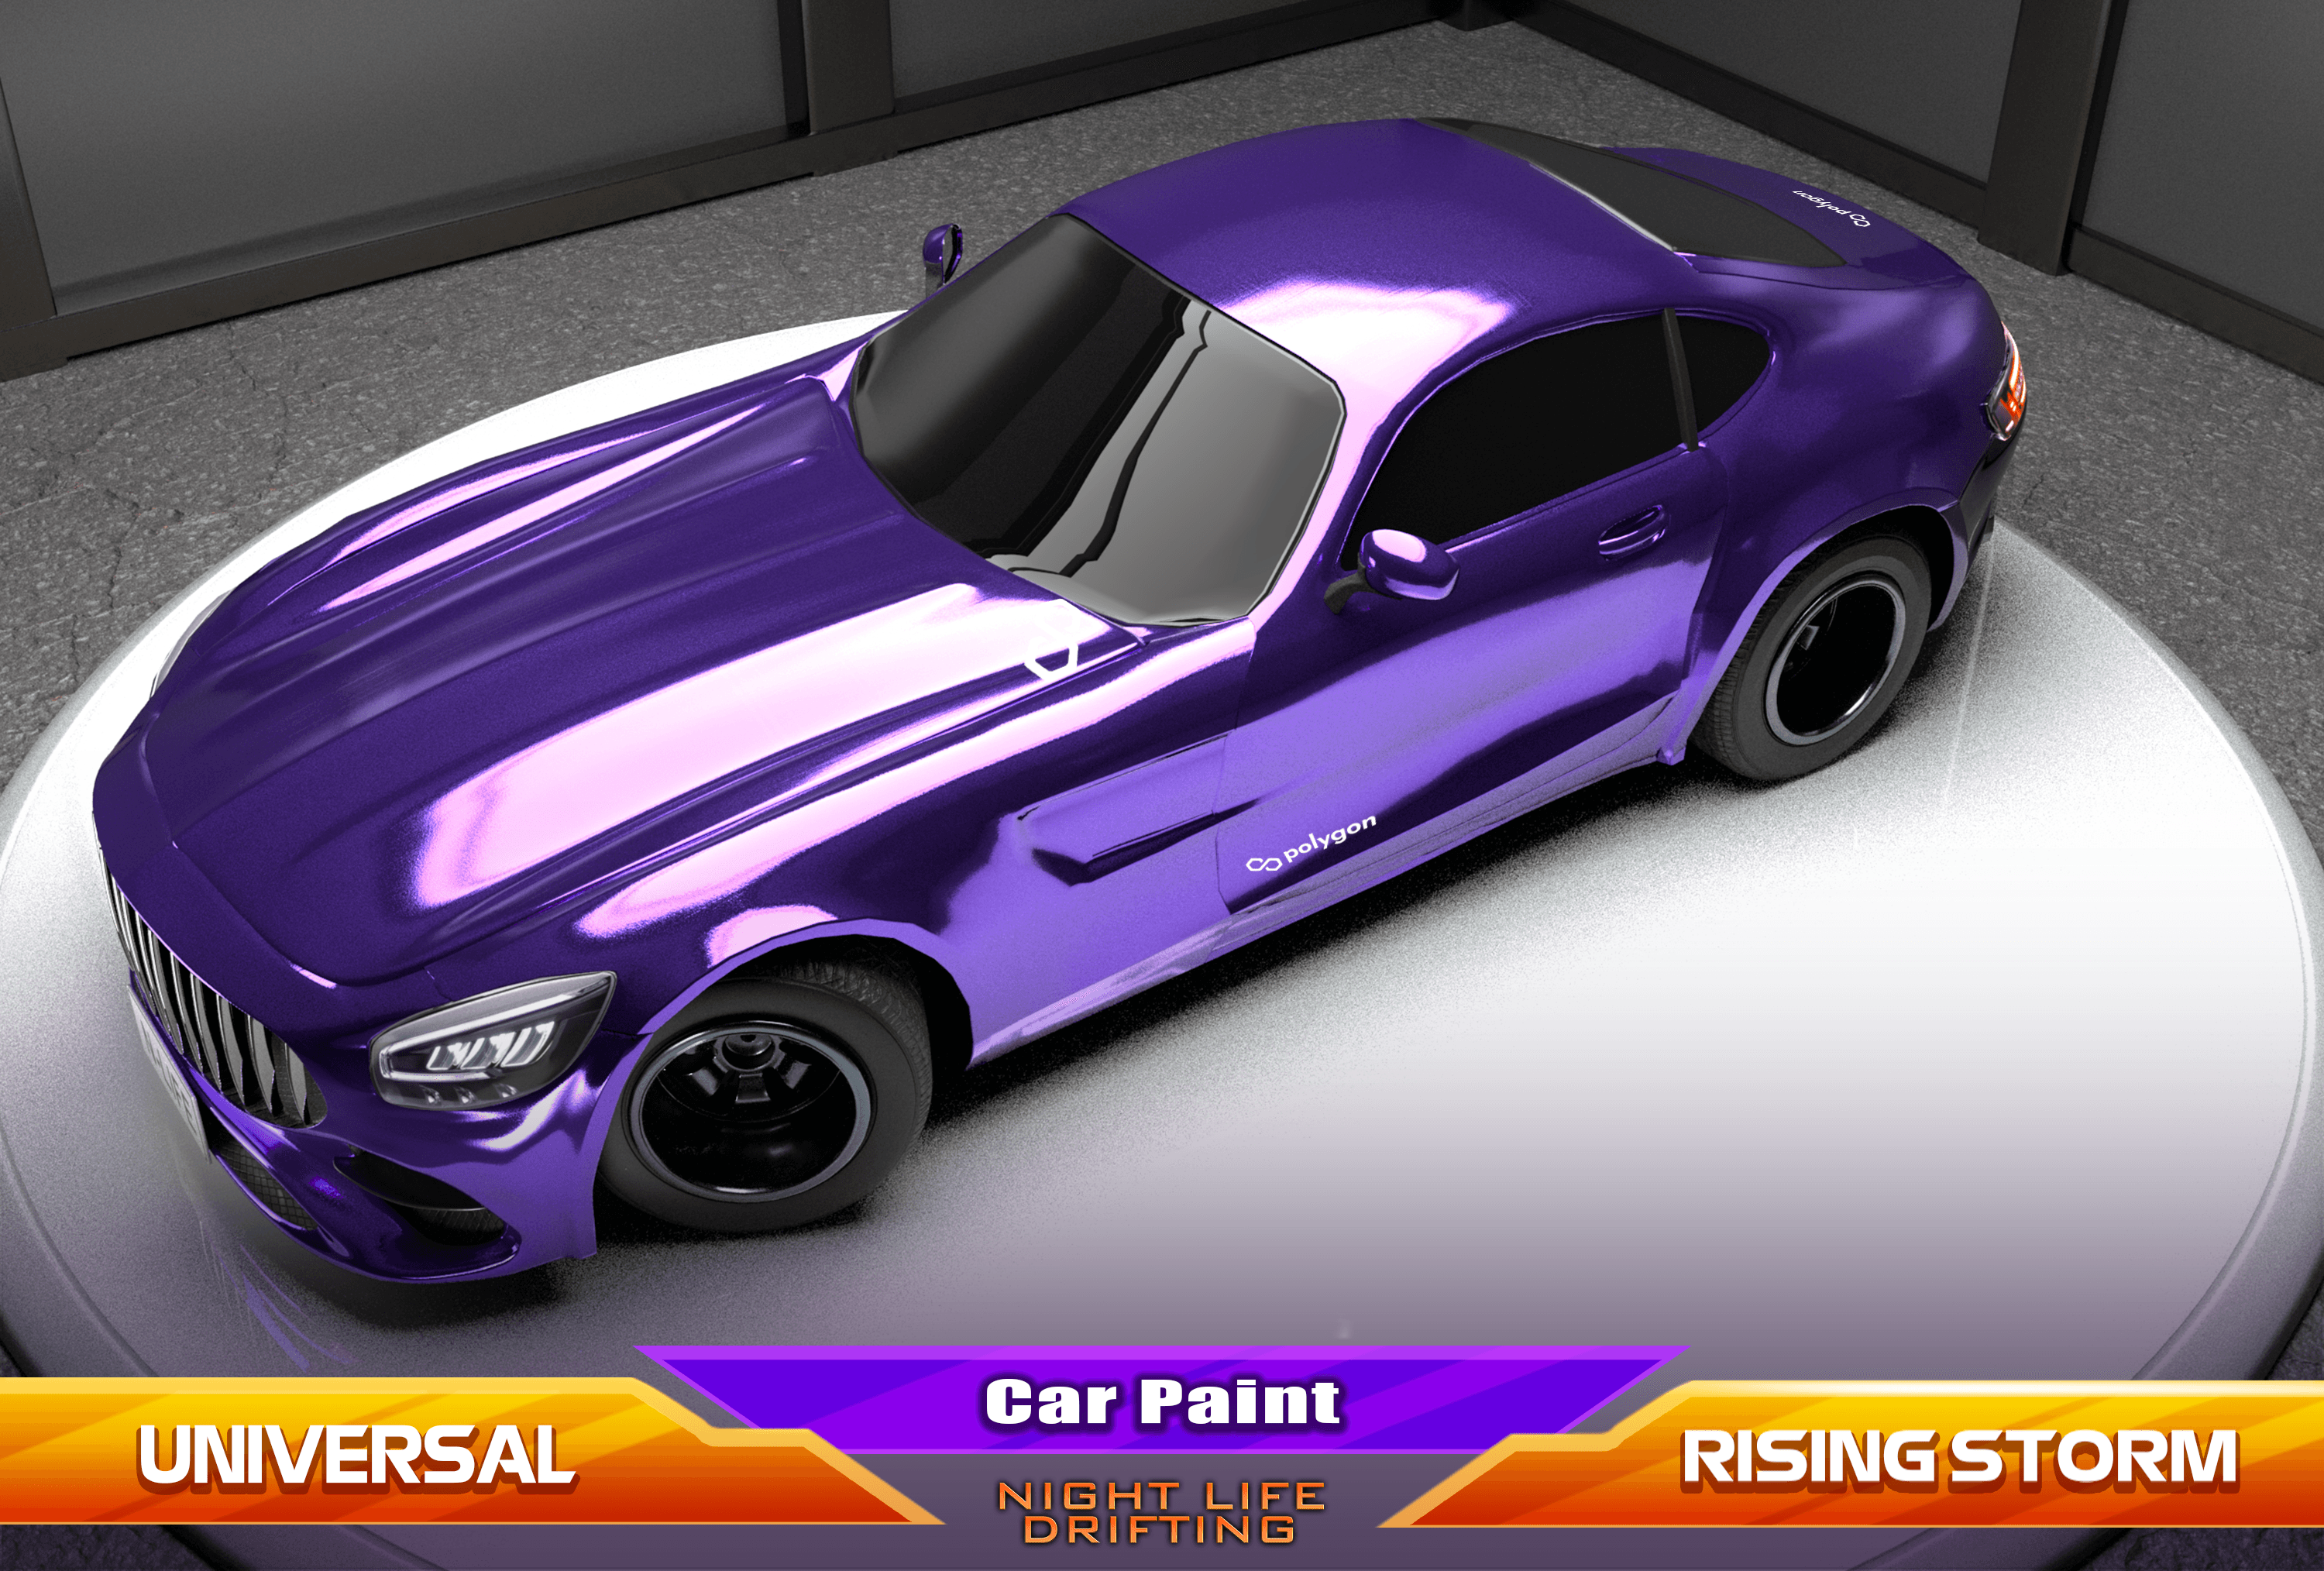 Universal - Rising Storm - Car Paint